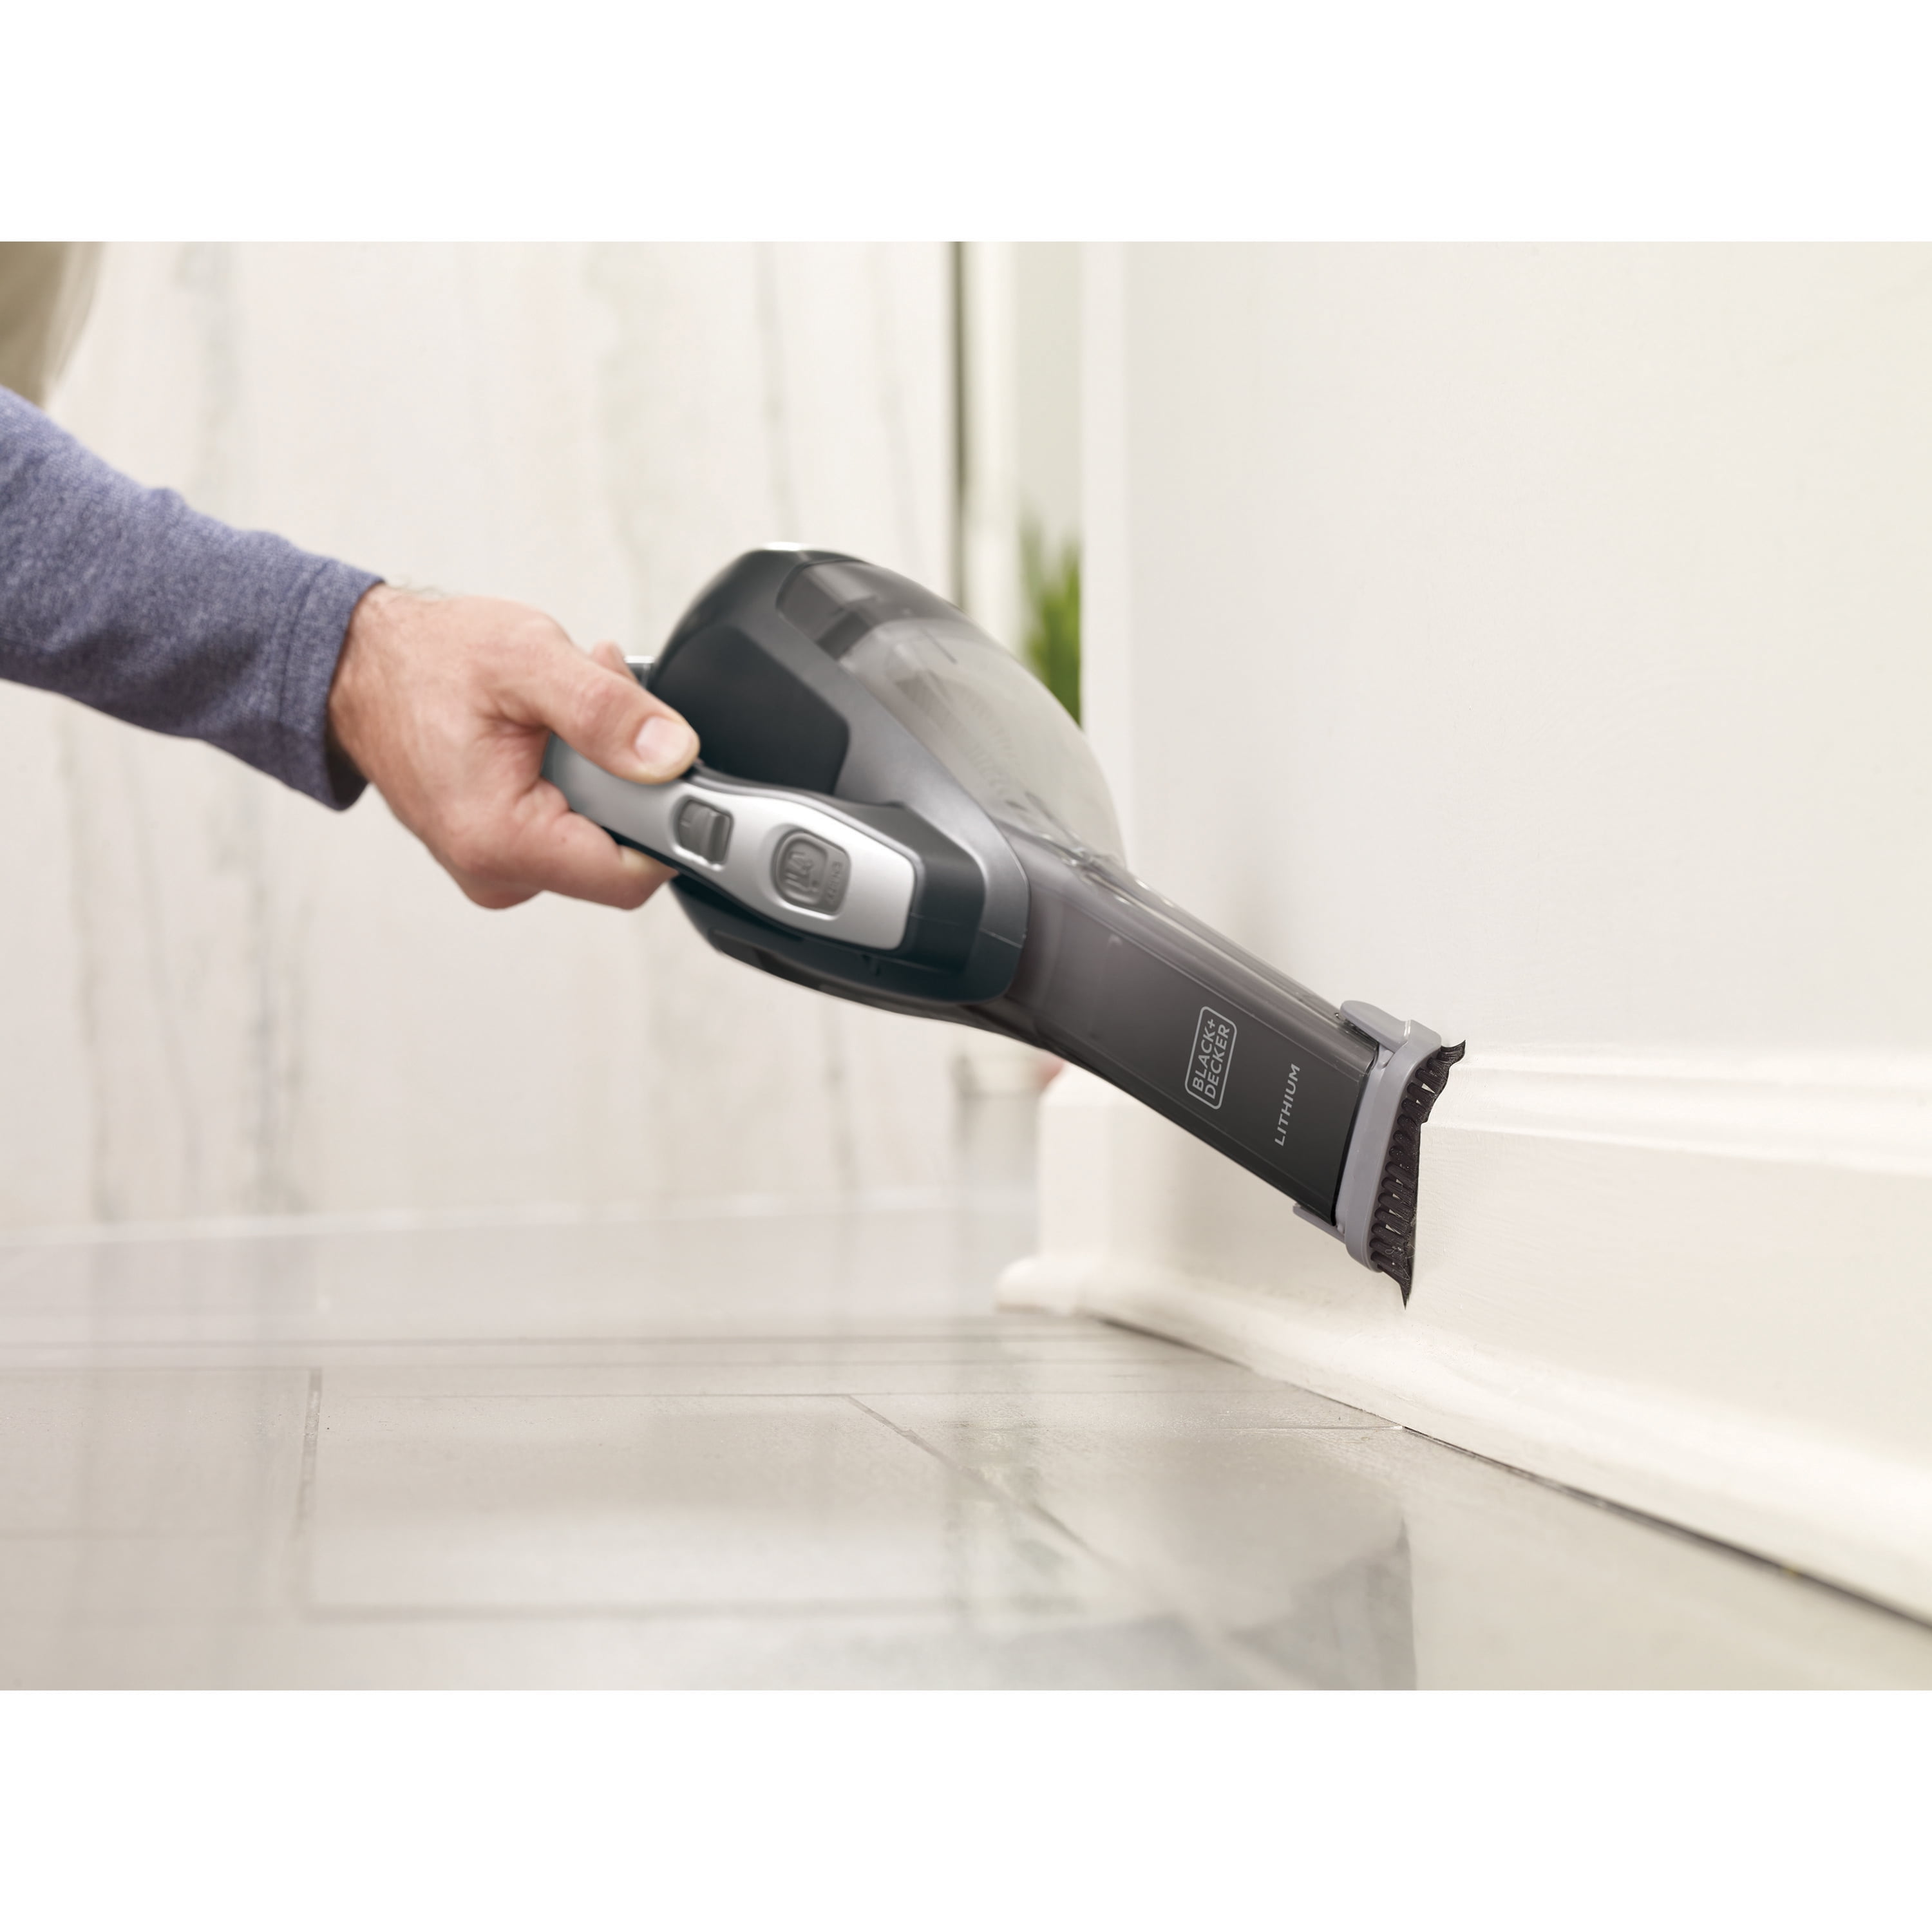 BLACK+DECKER™ Announces New Lithium Ion Vacuums with SMARTECH™ Sensing  Features